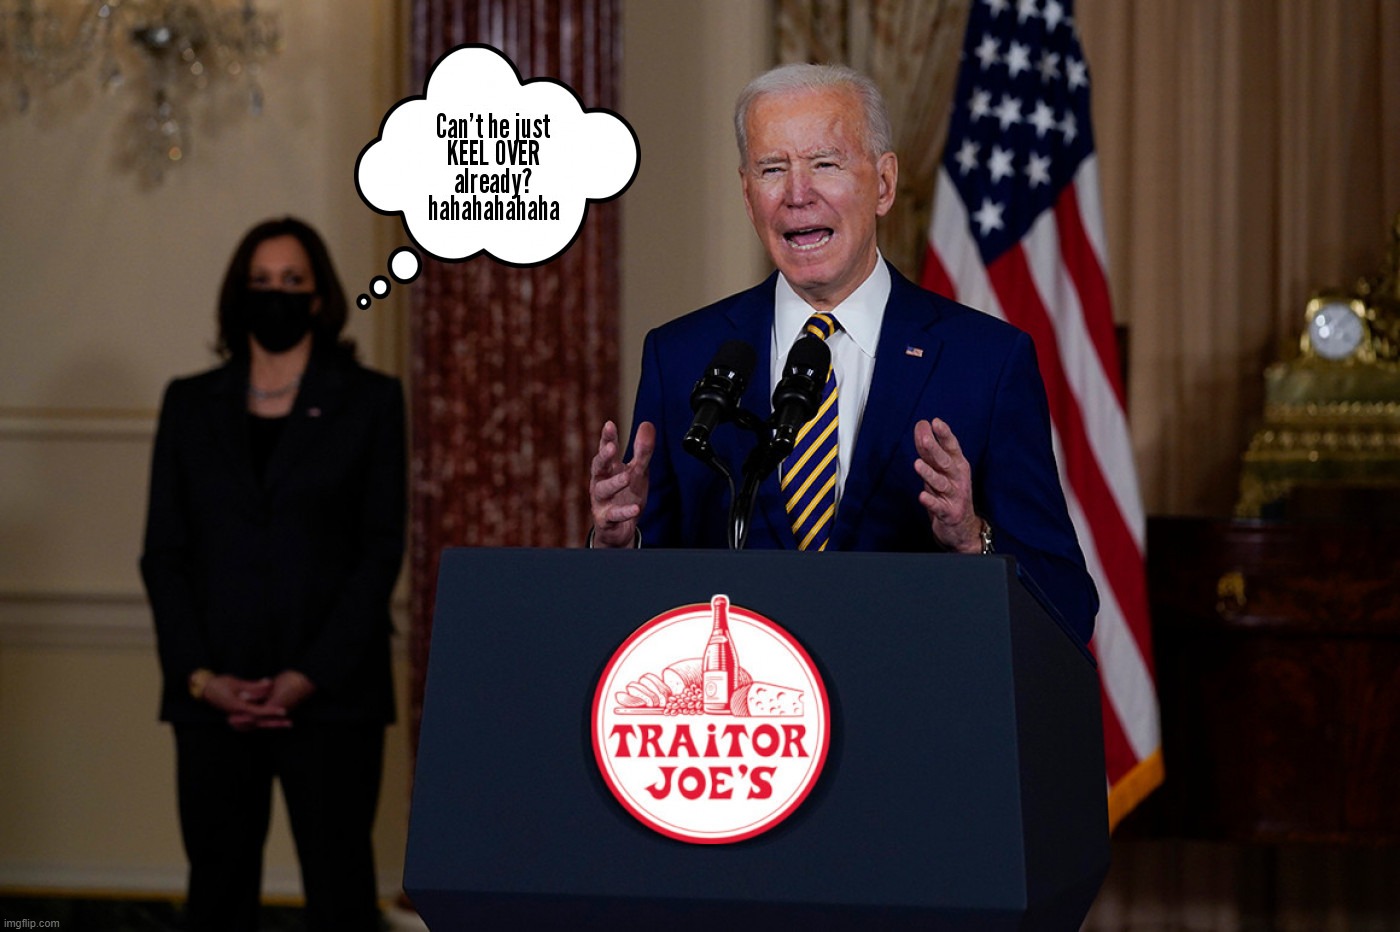 Traitor Joe's | image tagged in biden,blunder,taliban,afghanistan,traitor,kamala coming soon | made w/ Imgflip meme maker